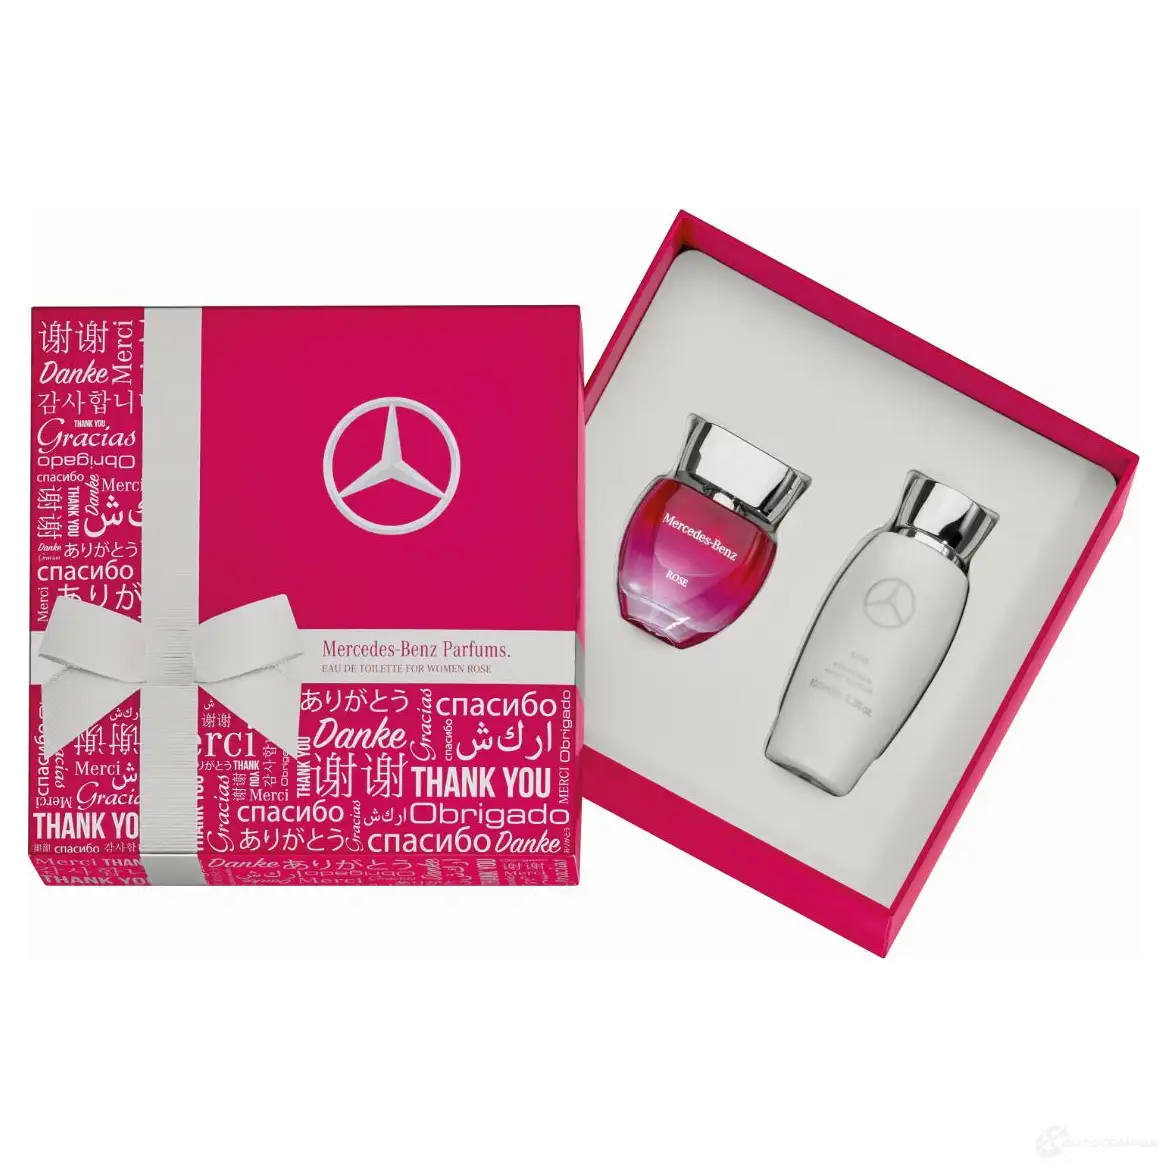 Mercedes-Benz Parfume Rose, подарочный набор MERCEDES-BENZ b66956007 1438169499 P LTTH изображение 1